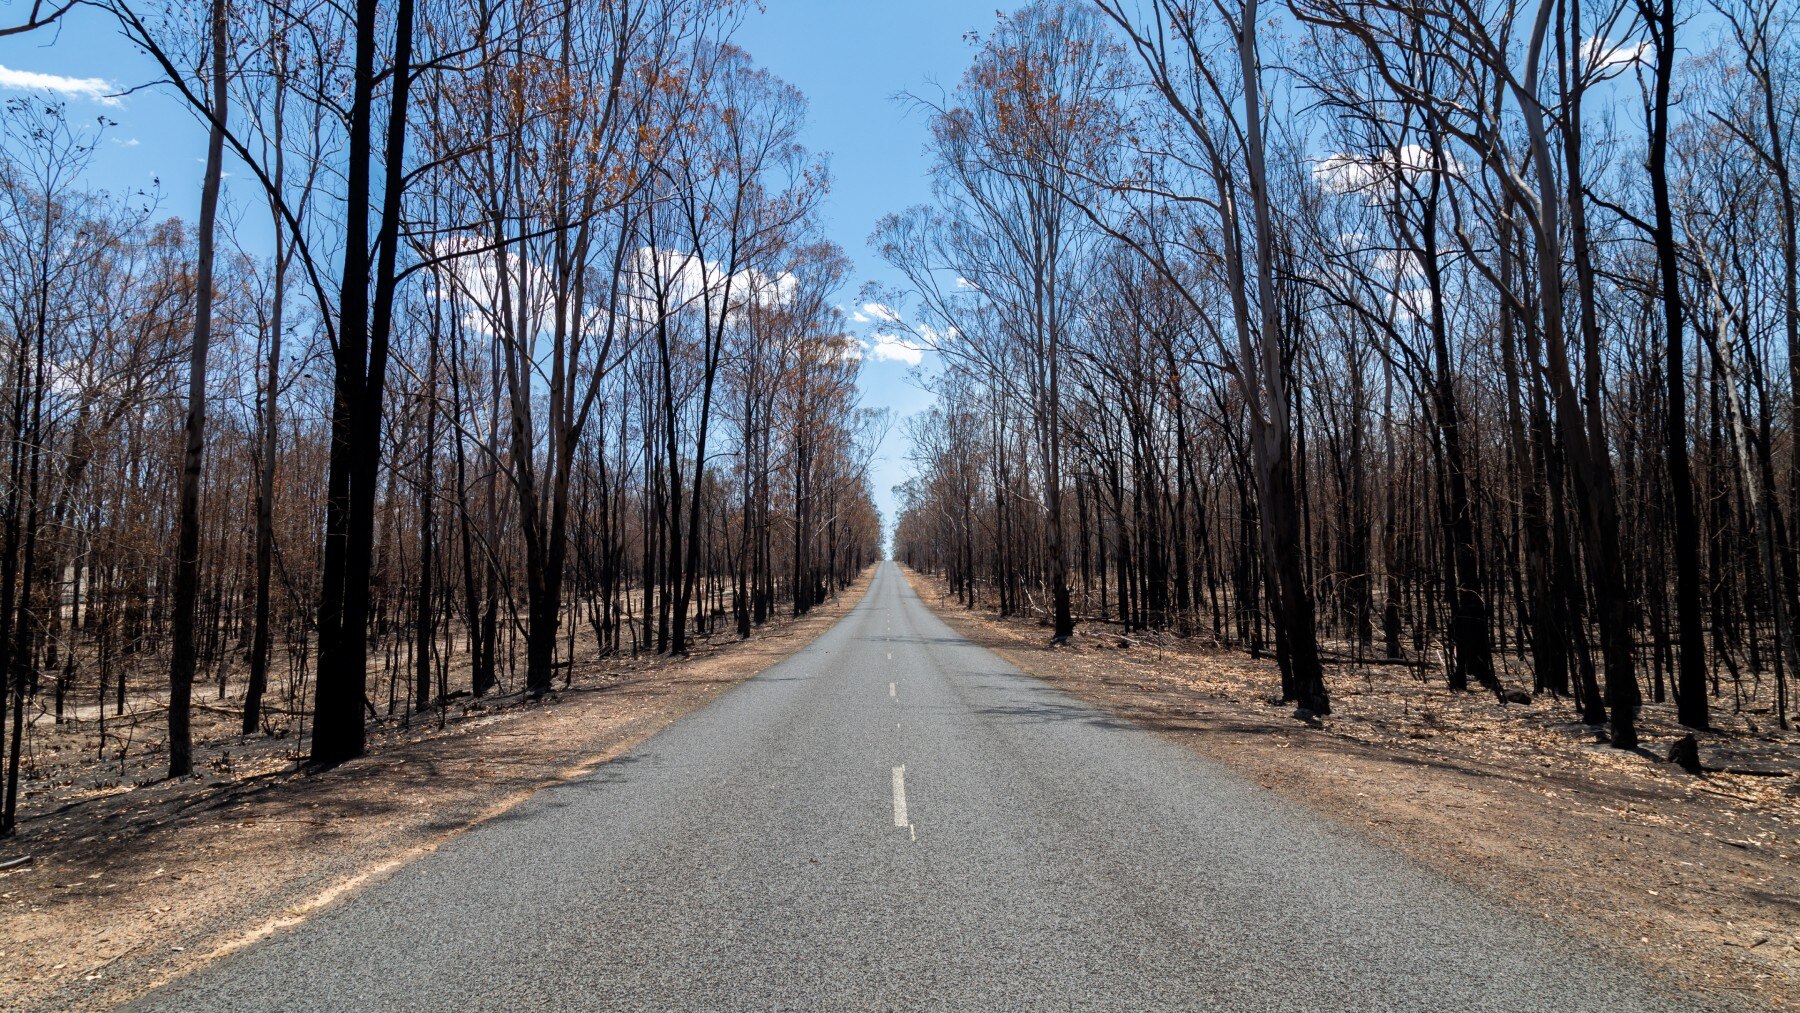 Burnt trees,blackened tree trunks along side a road